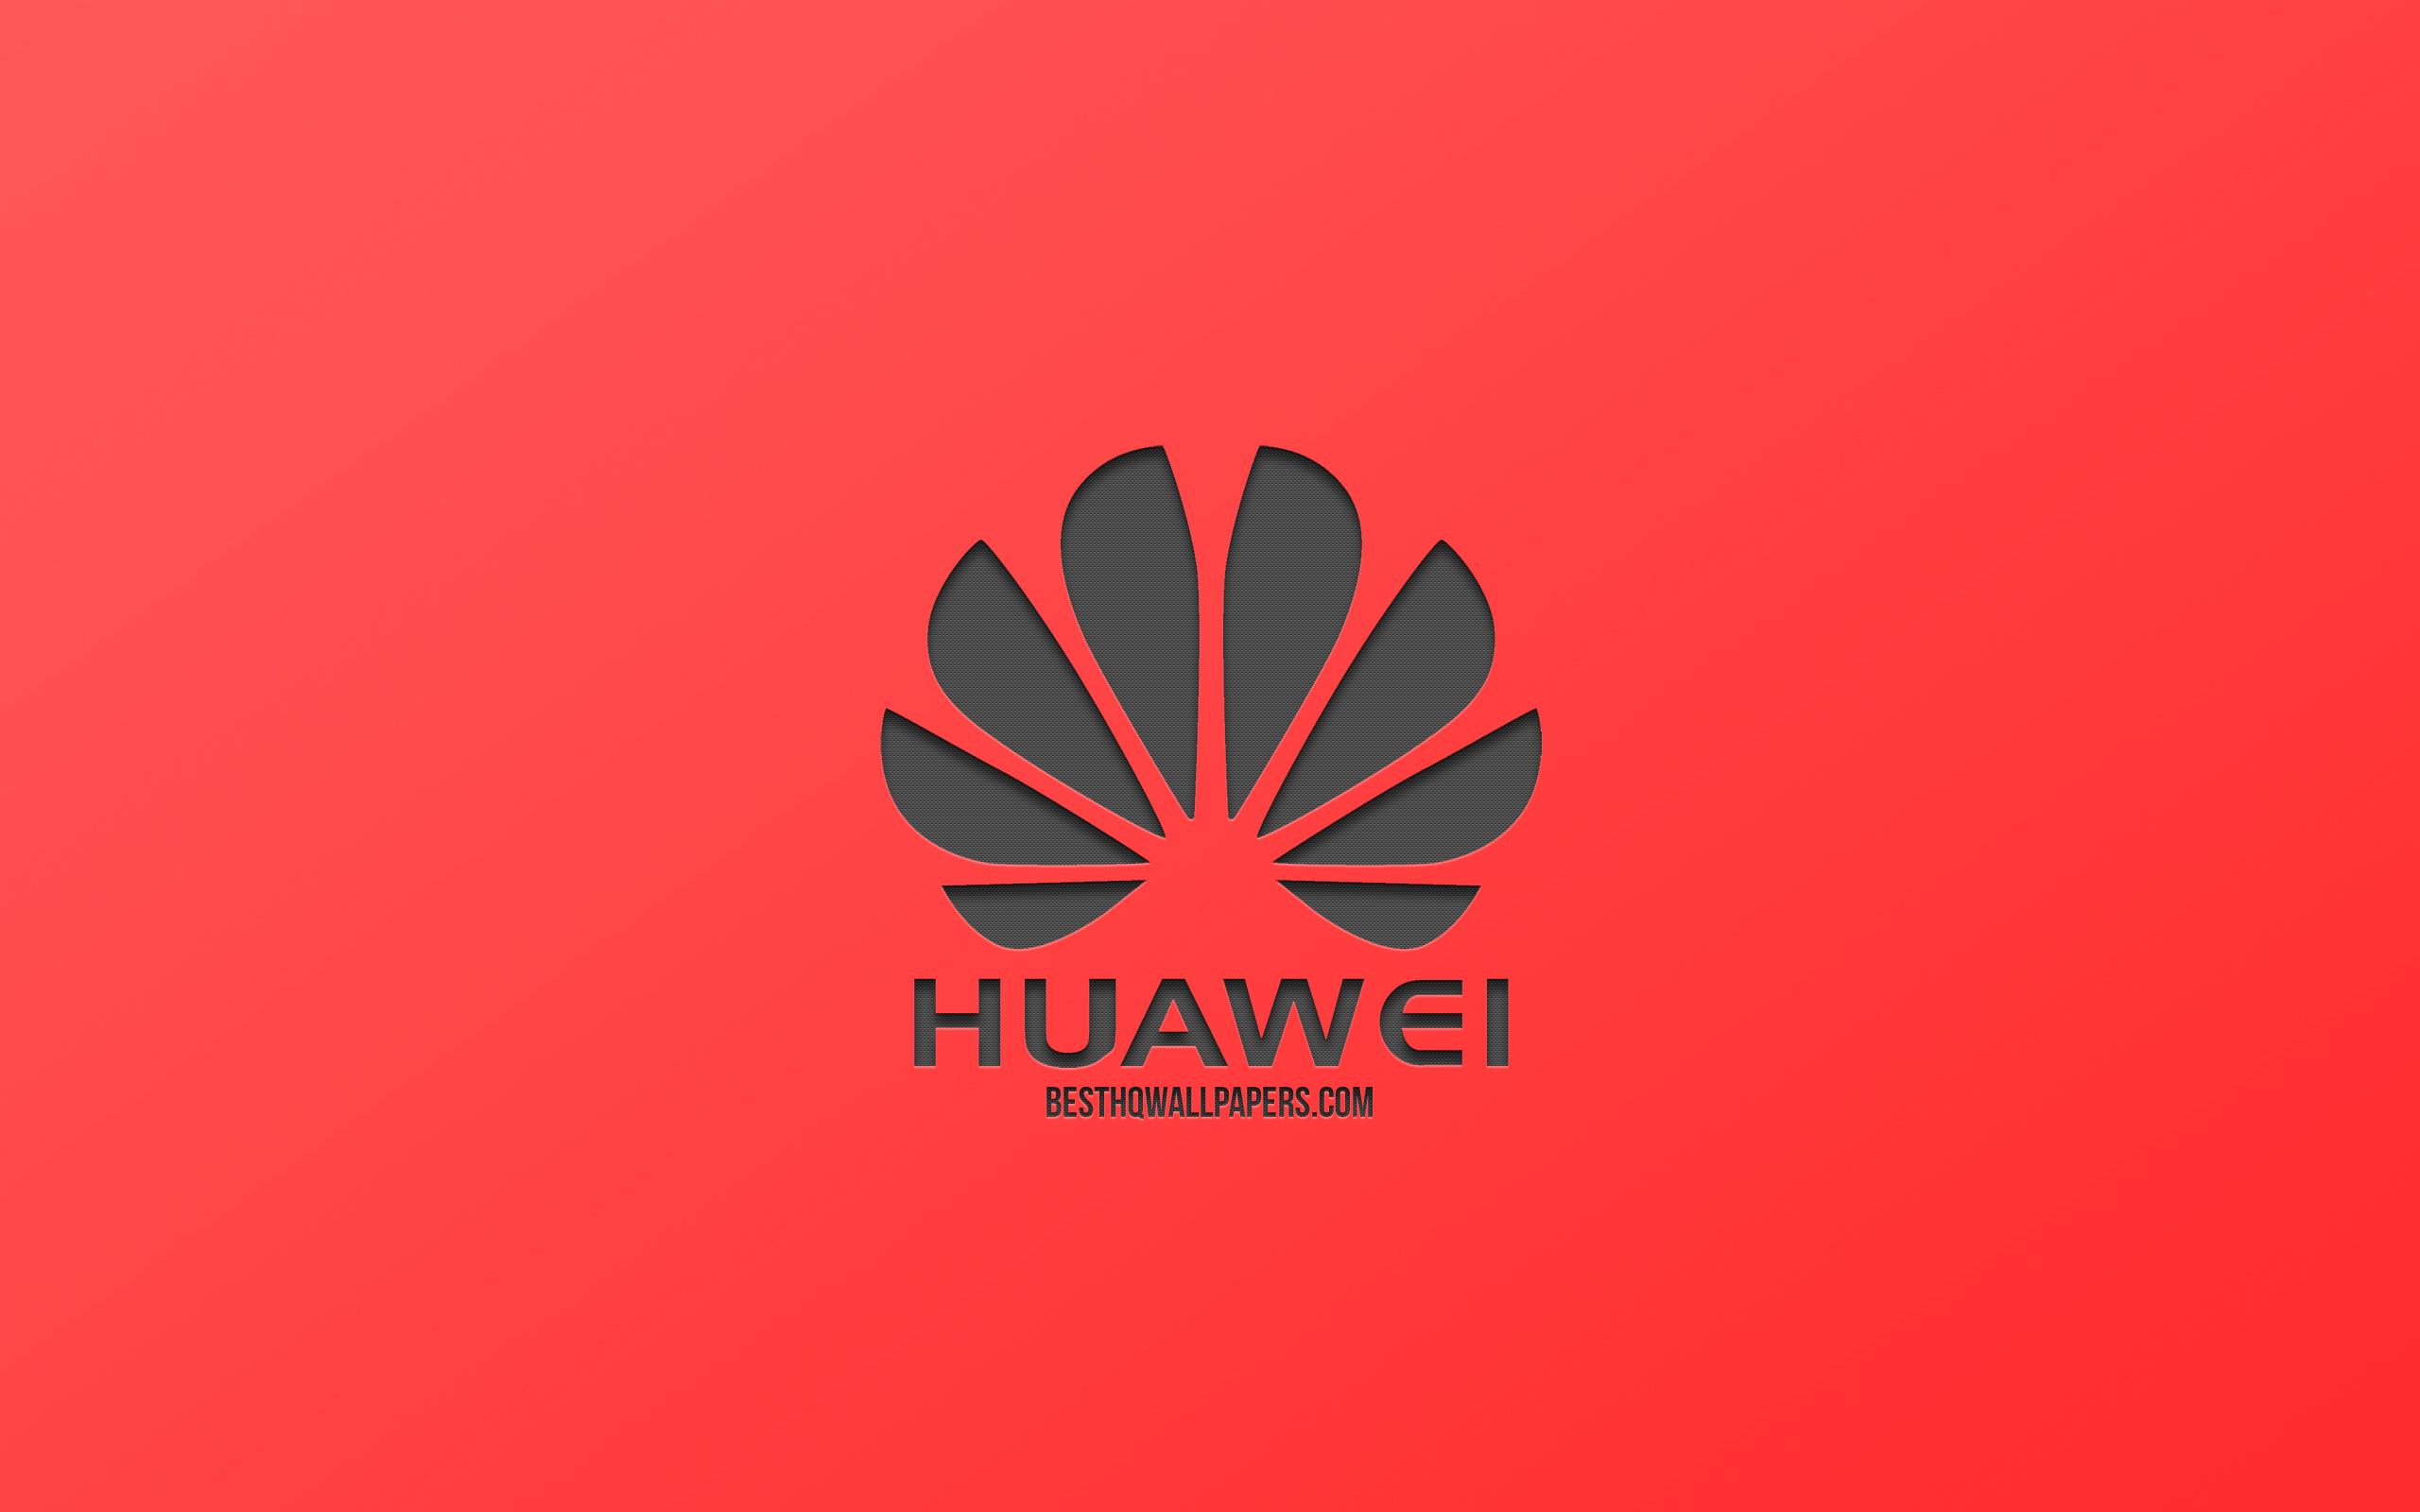 Download wallpaper Huawei, logo, red background, creative design